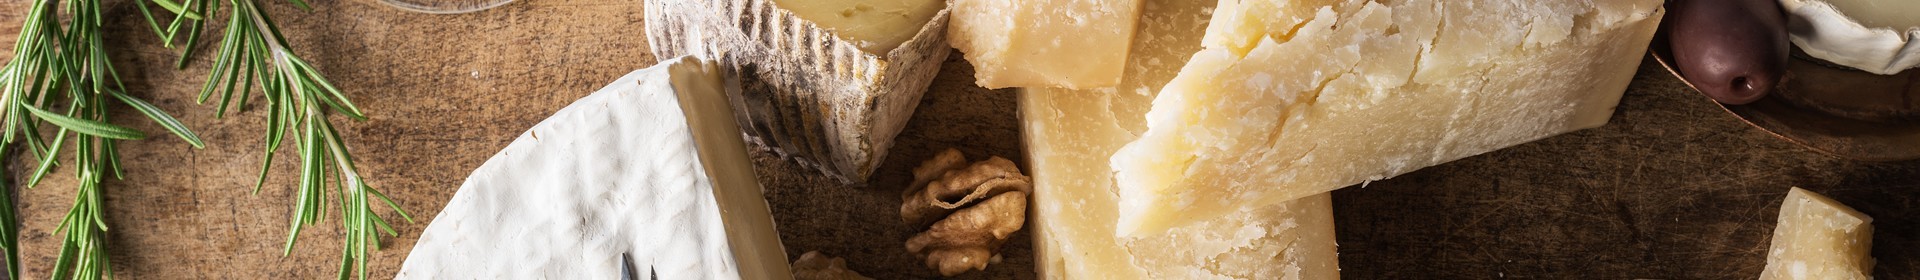 Sardinian cheeses - Typical Sardinian cheeses - Presidio del Cibo